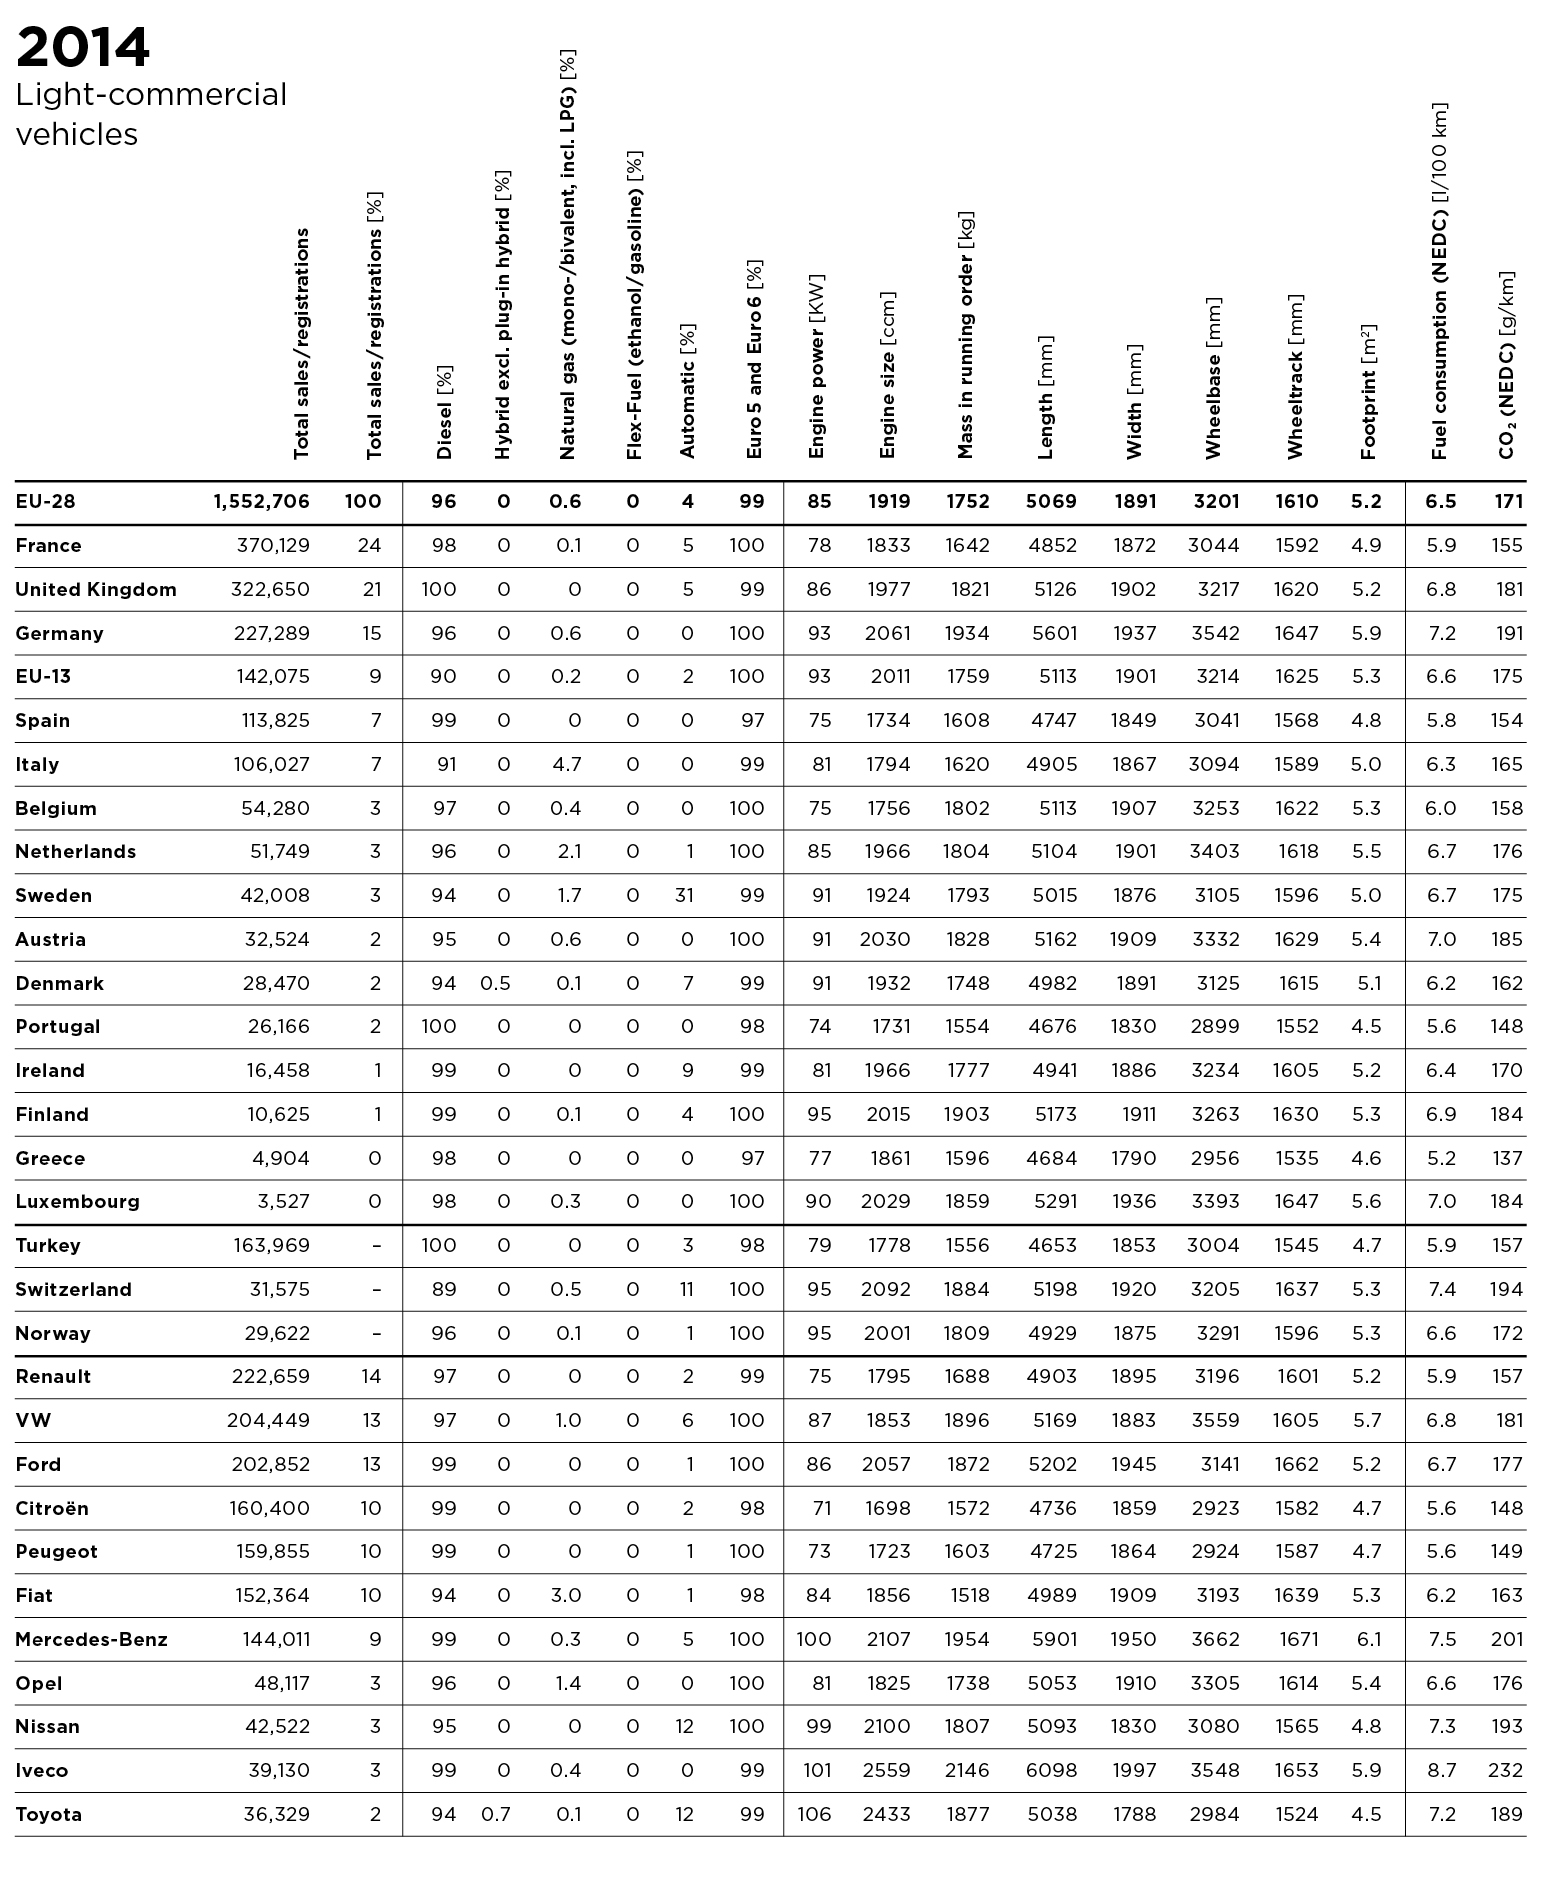 LCV 2014 data